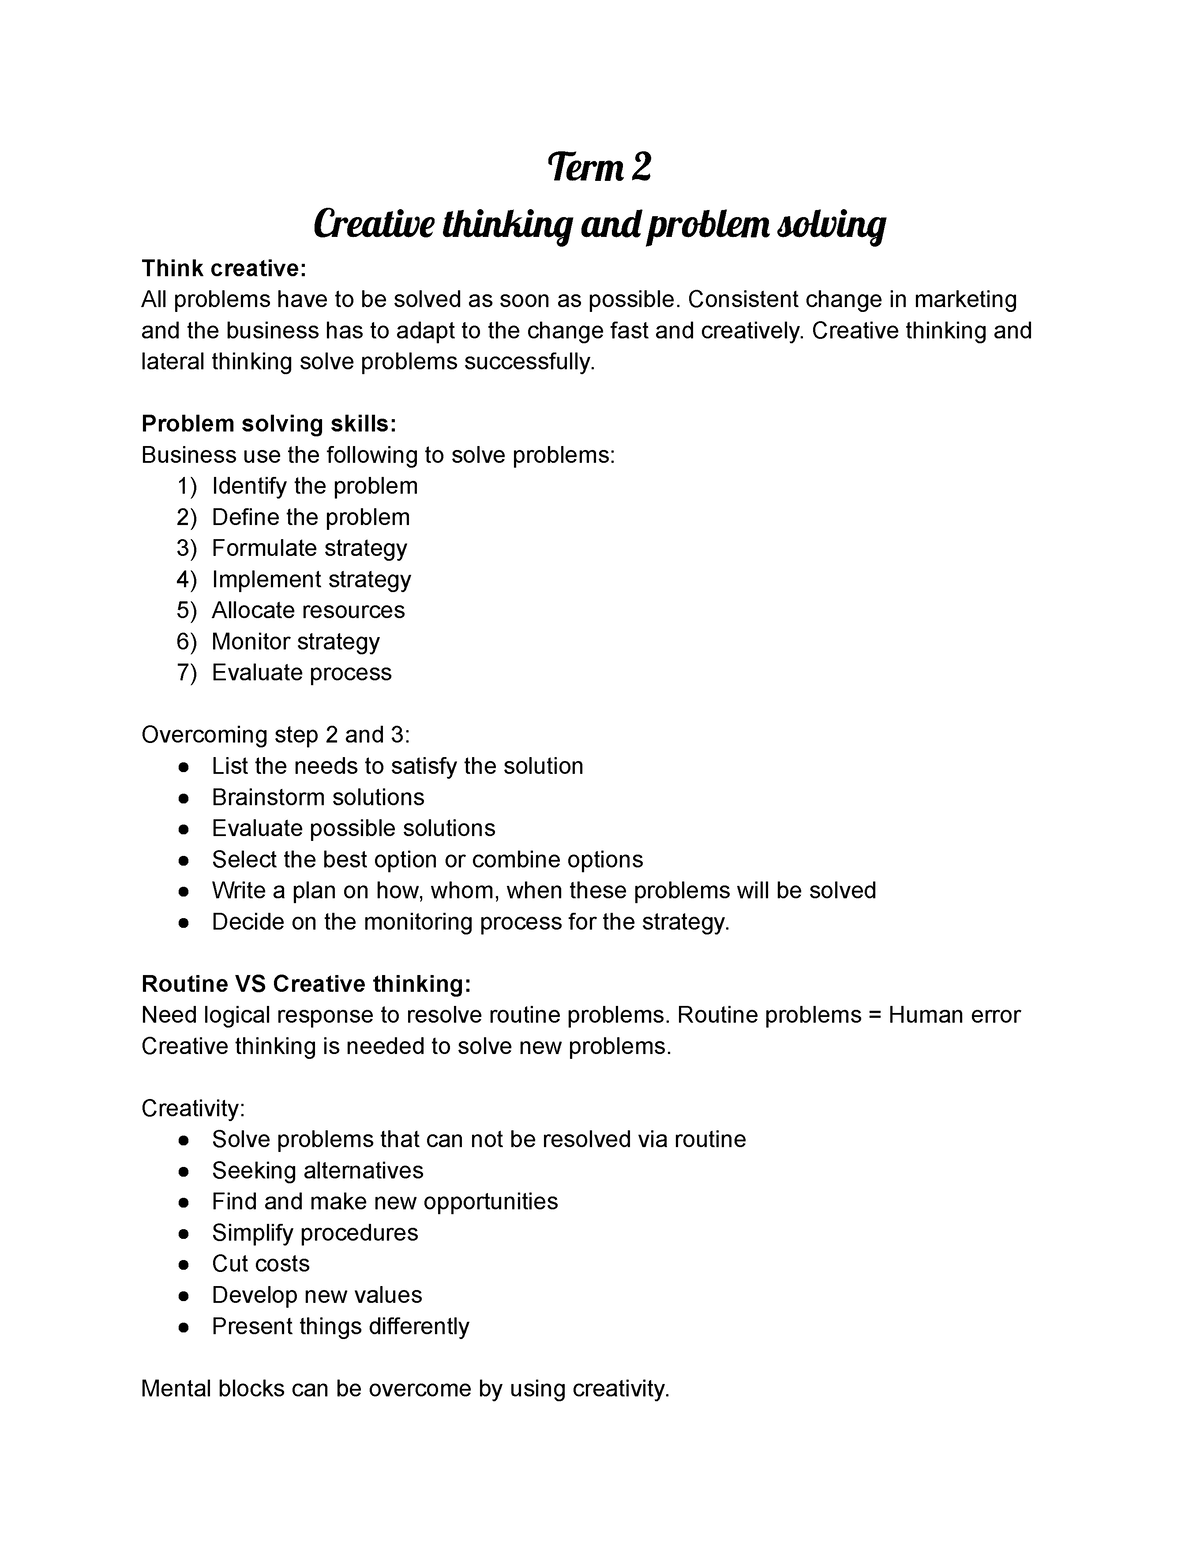 creative thinking and problem solving essay grade 11 pdf